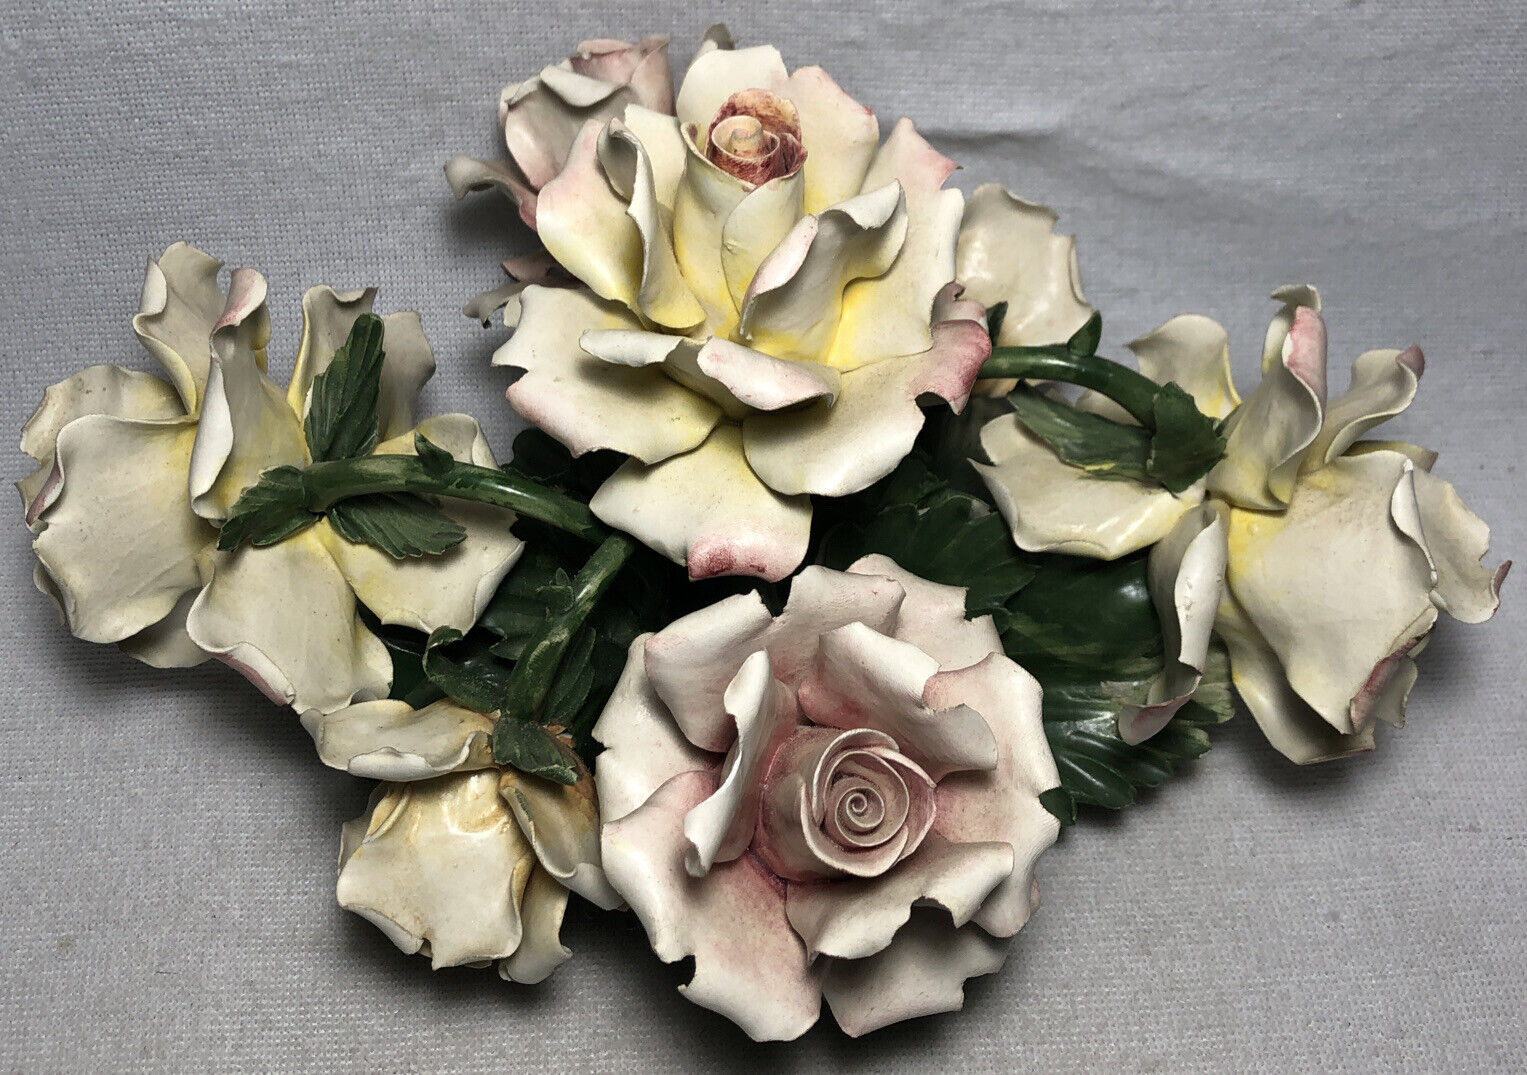 11” x 6.5” Vtg Capodimonte Visconti Mollica Pastel Flowers Centerpiece Sculpture